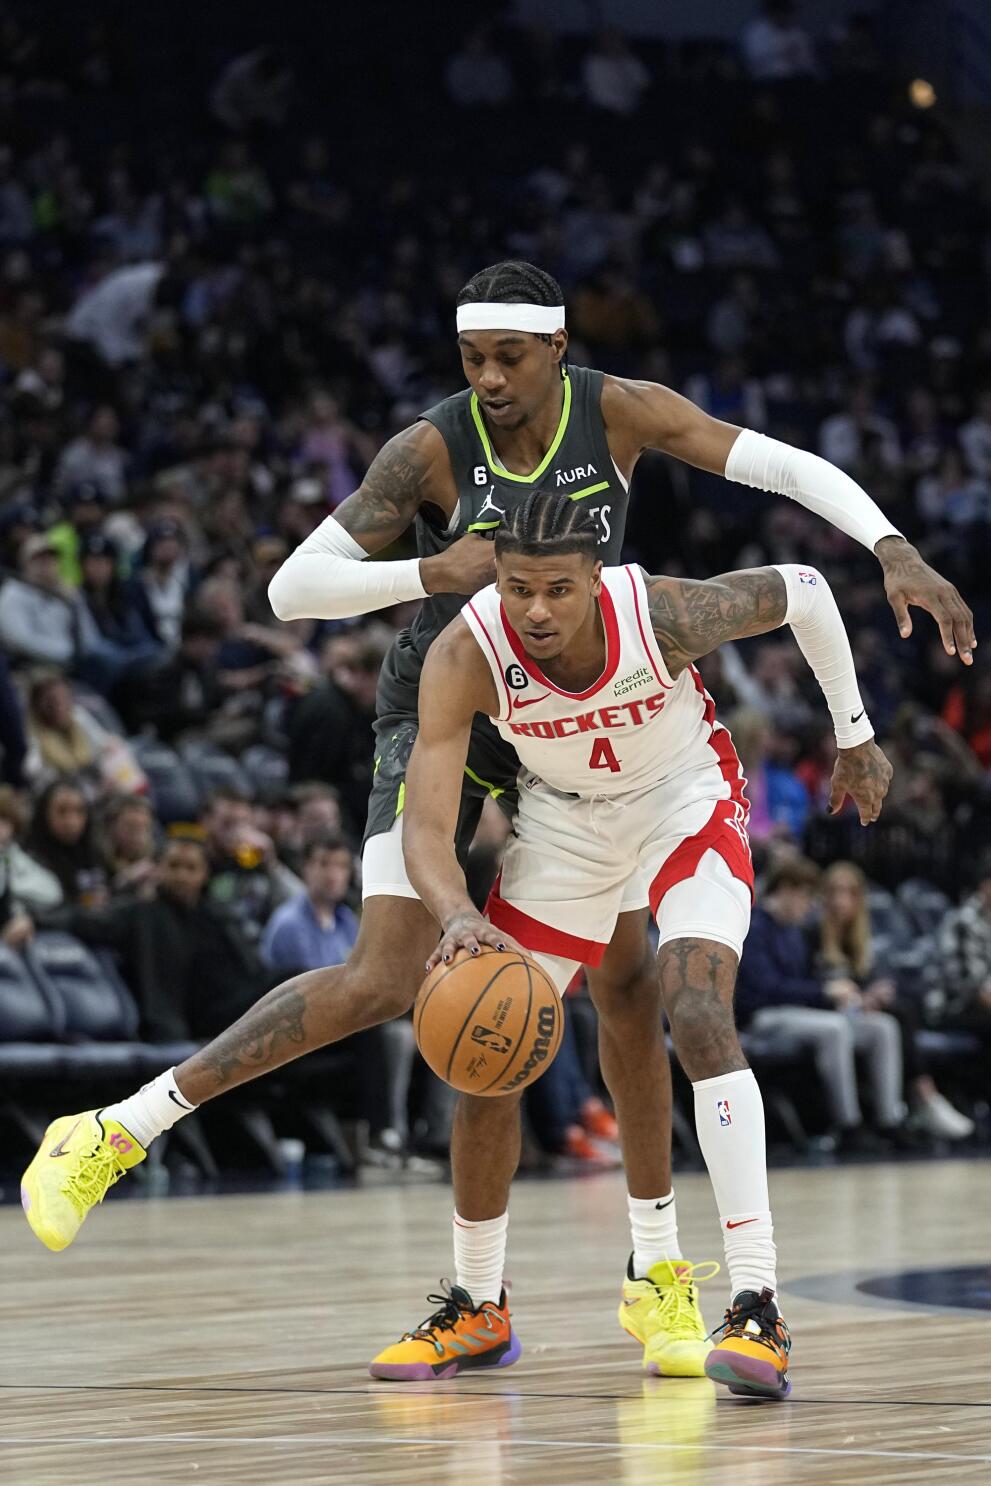 Green scores career-high 42, Rockets end 13-game losing streak